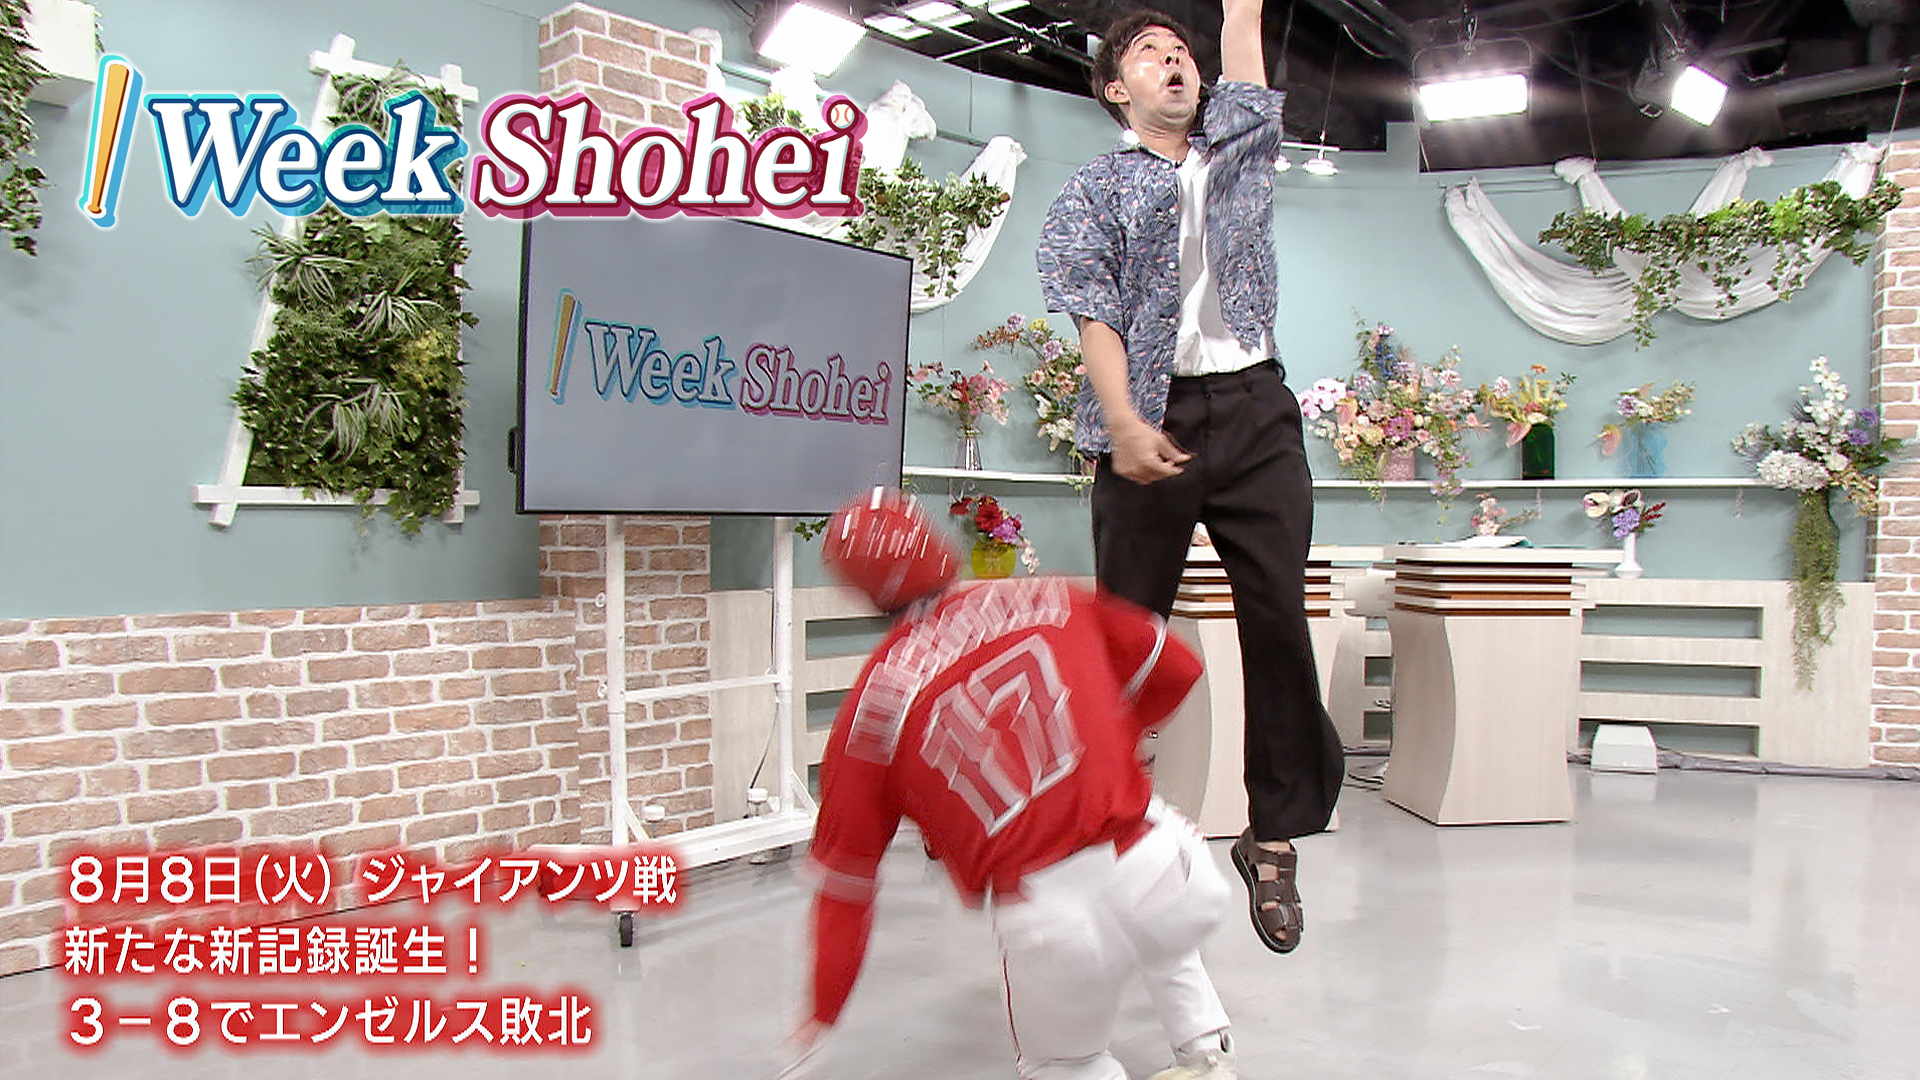 #12「1 Week Shohei」